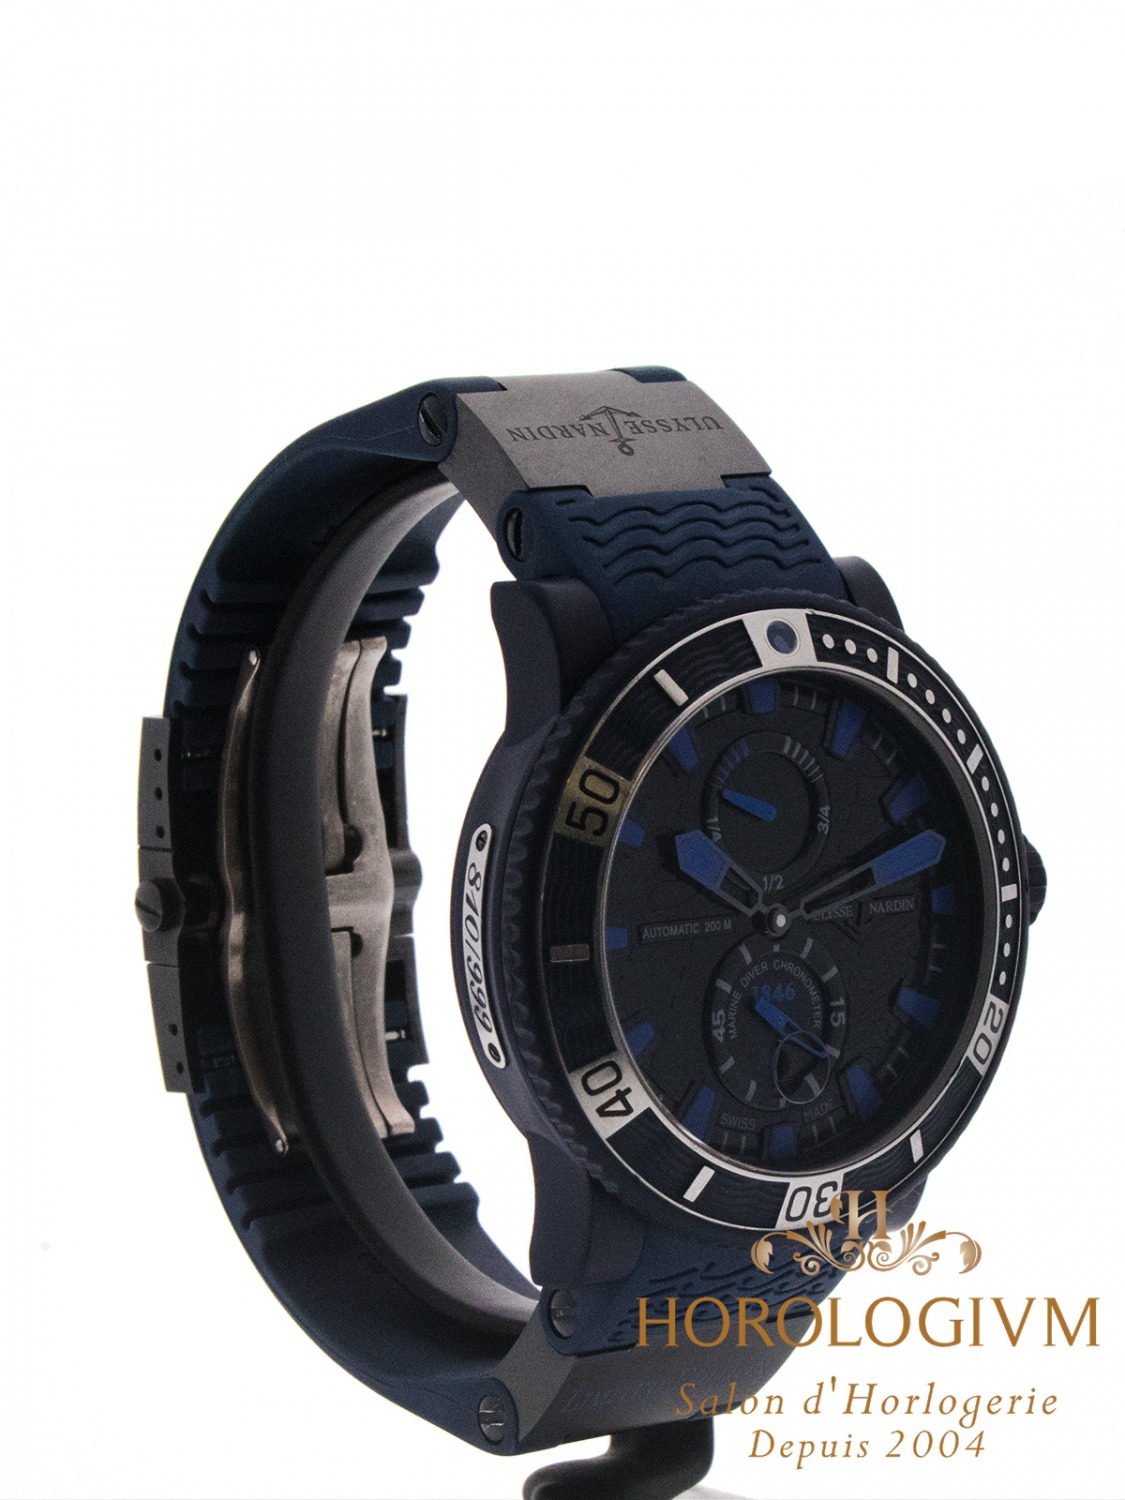 Ulysse Nardin Maxi Marine Diver “Blue Sea” Limited Edition 999 pcs watch, black